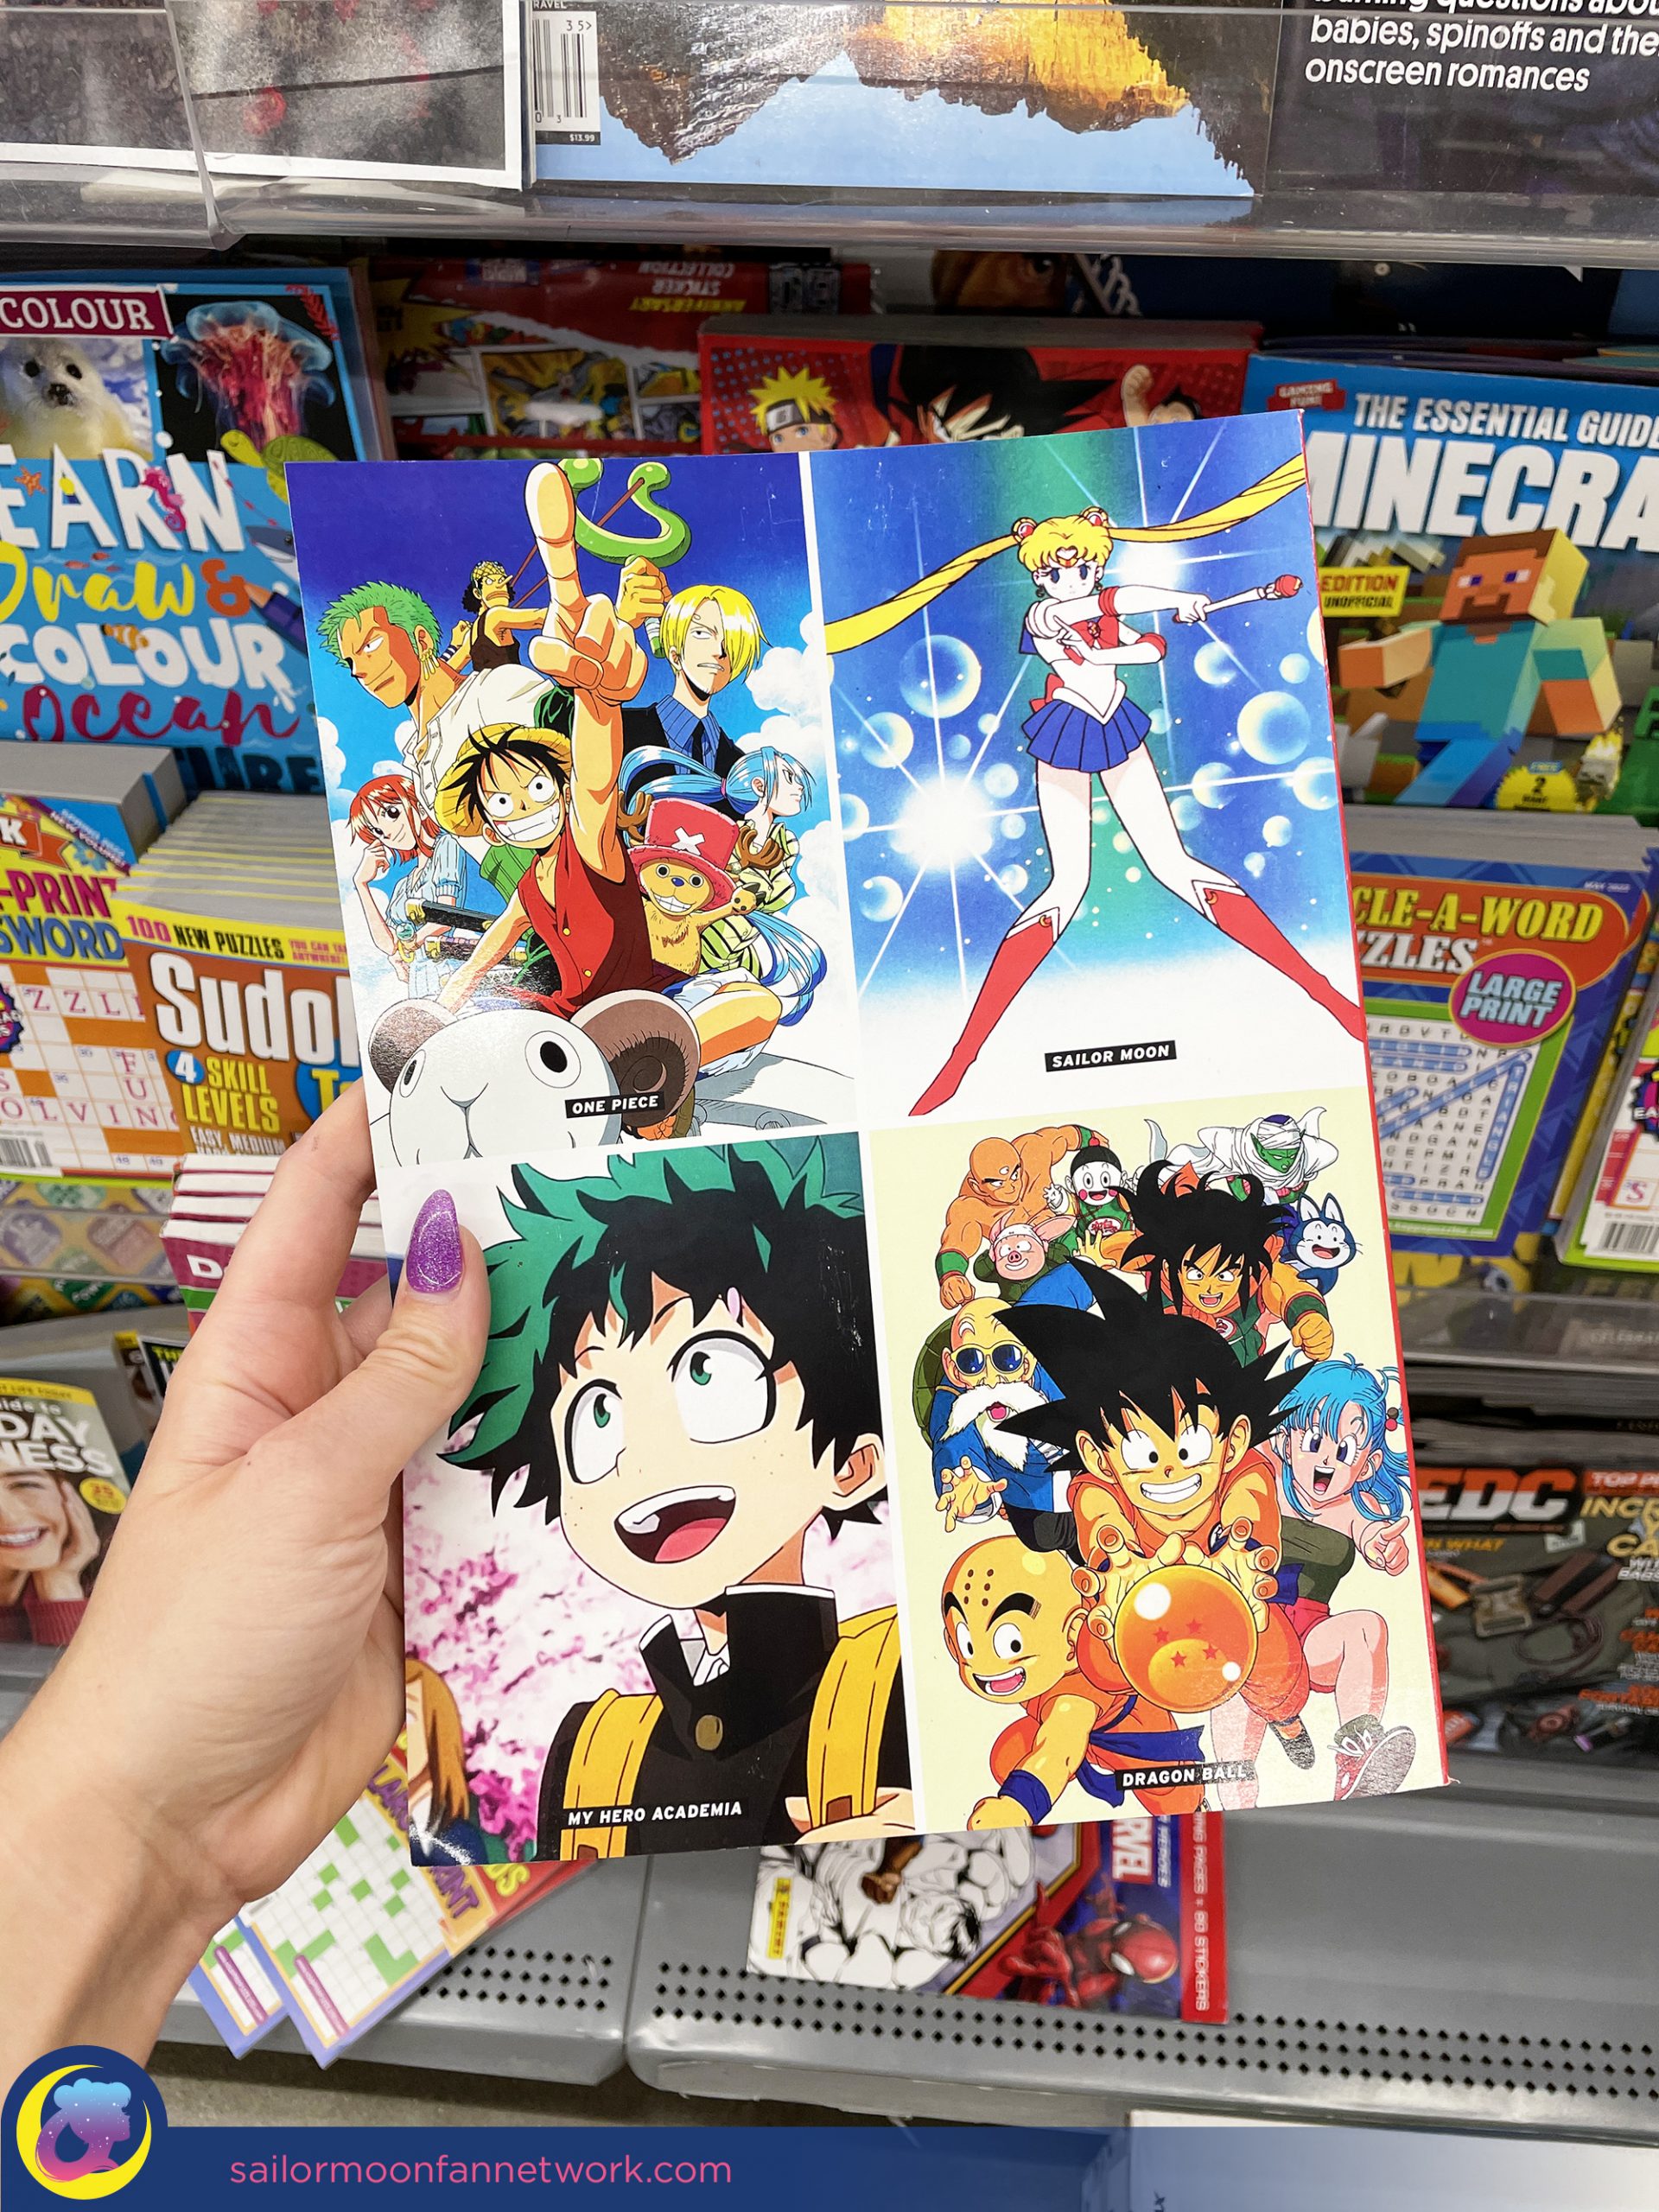 Explore the Ultimate Anime & Manga Shop